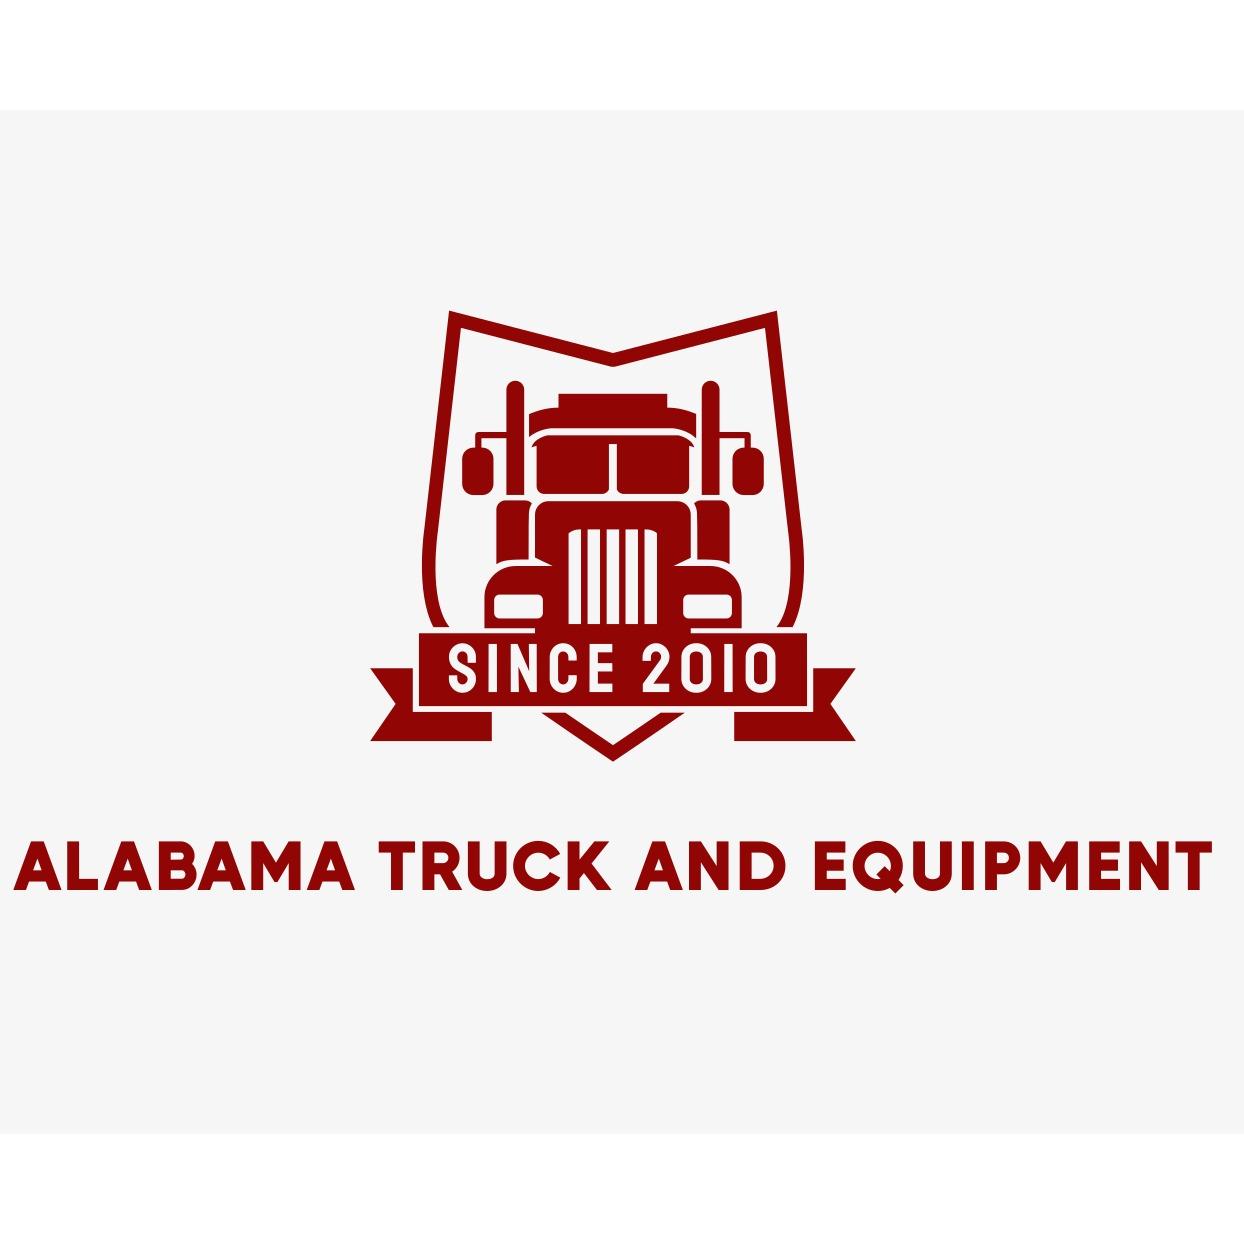 Alabama Truck and Equipment